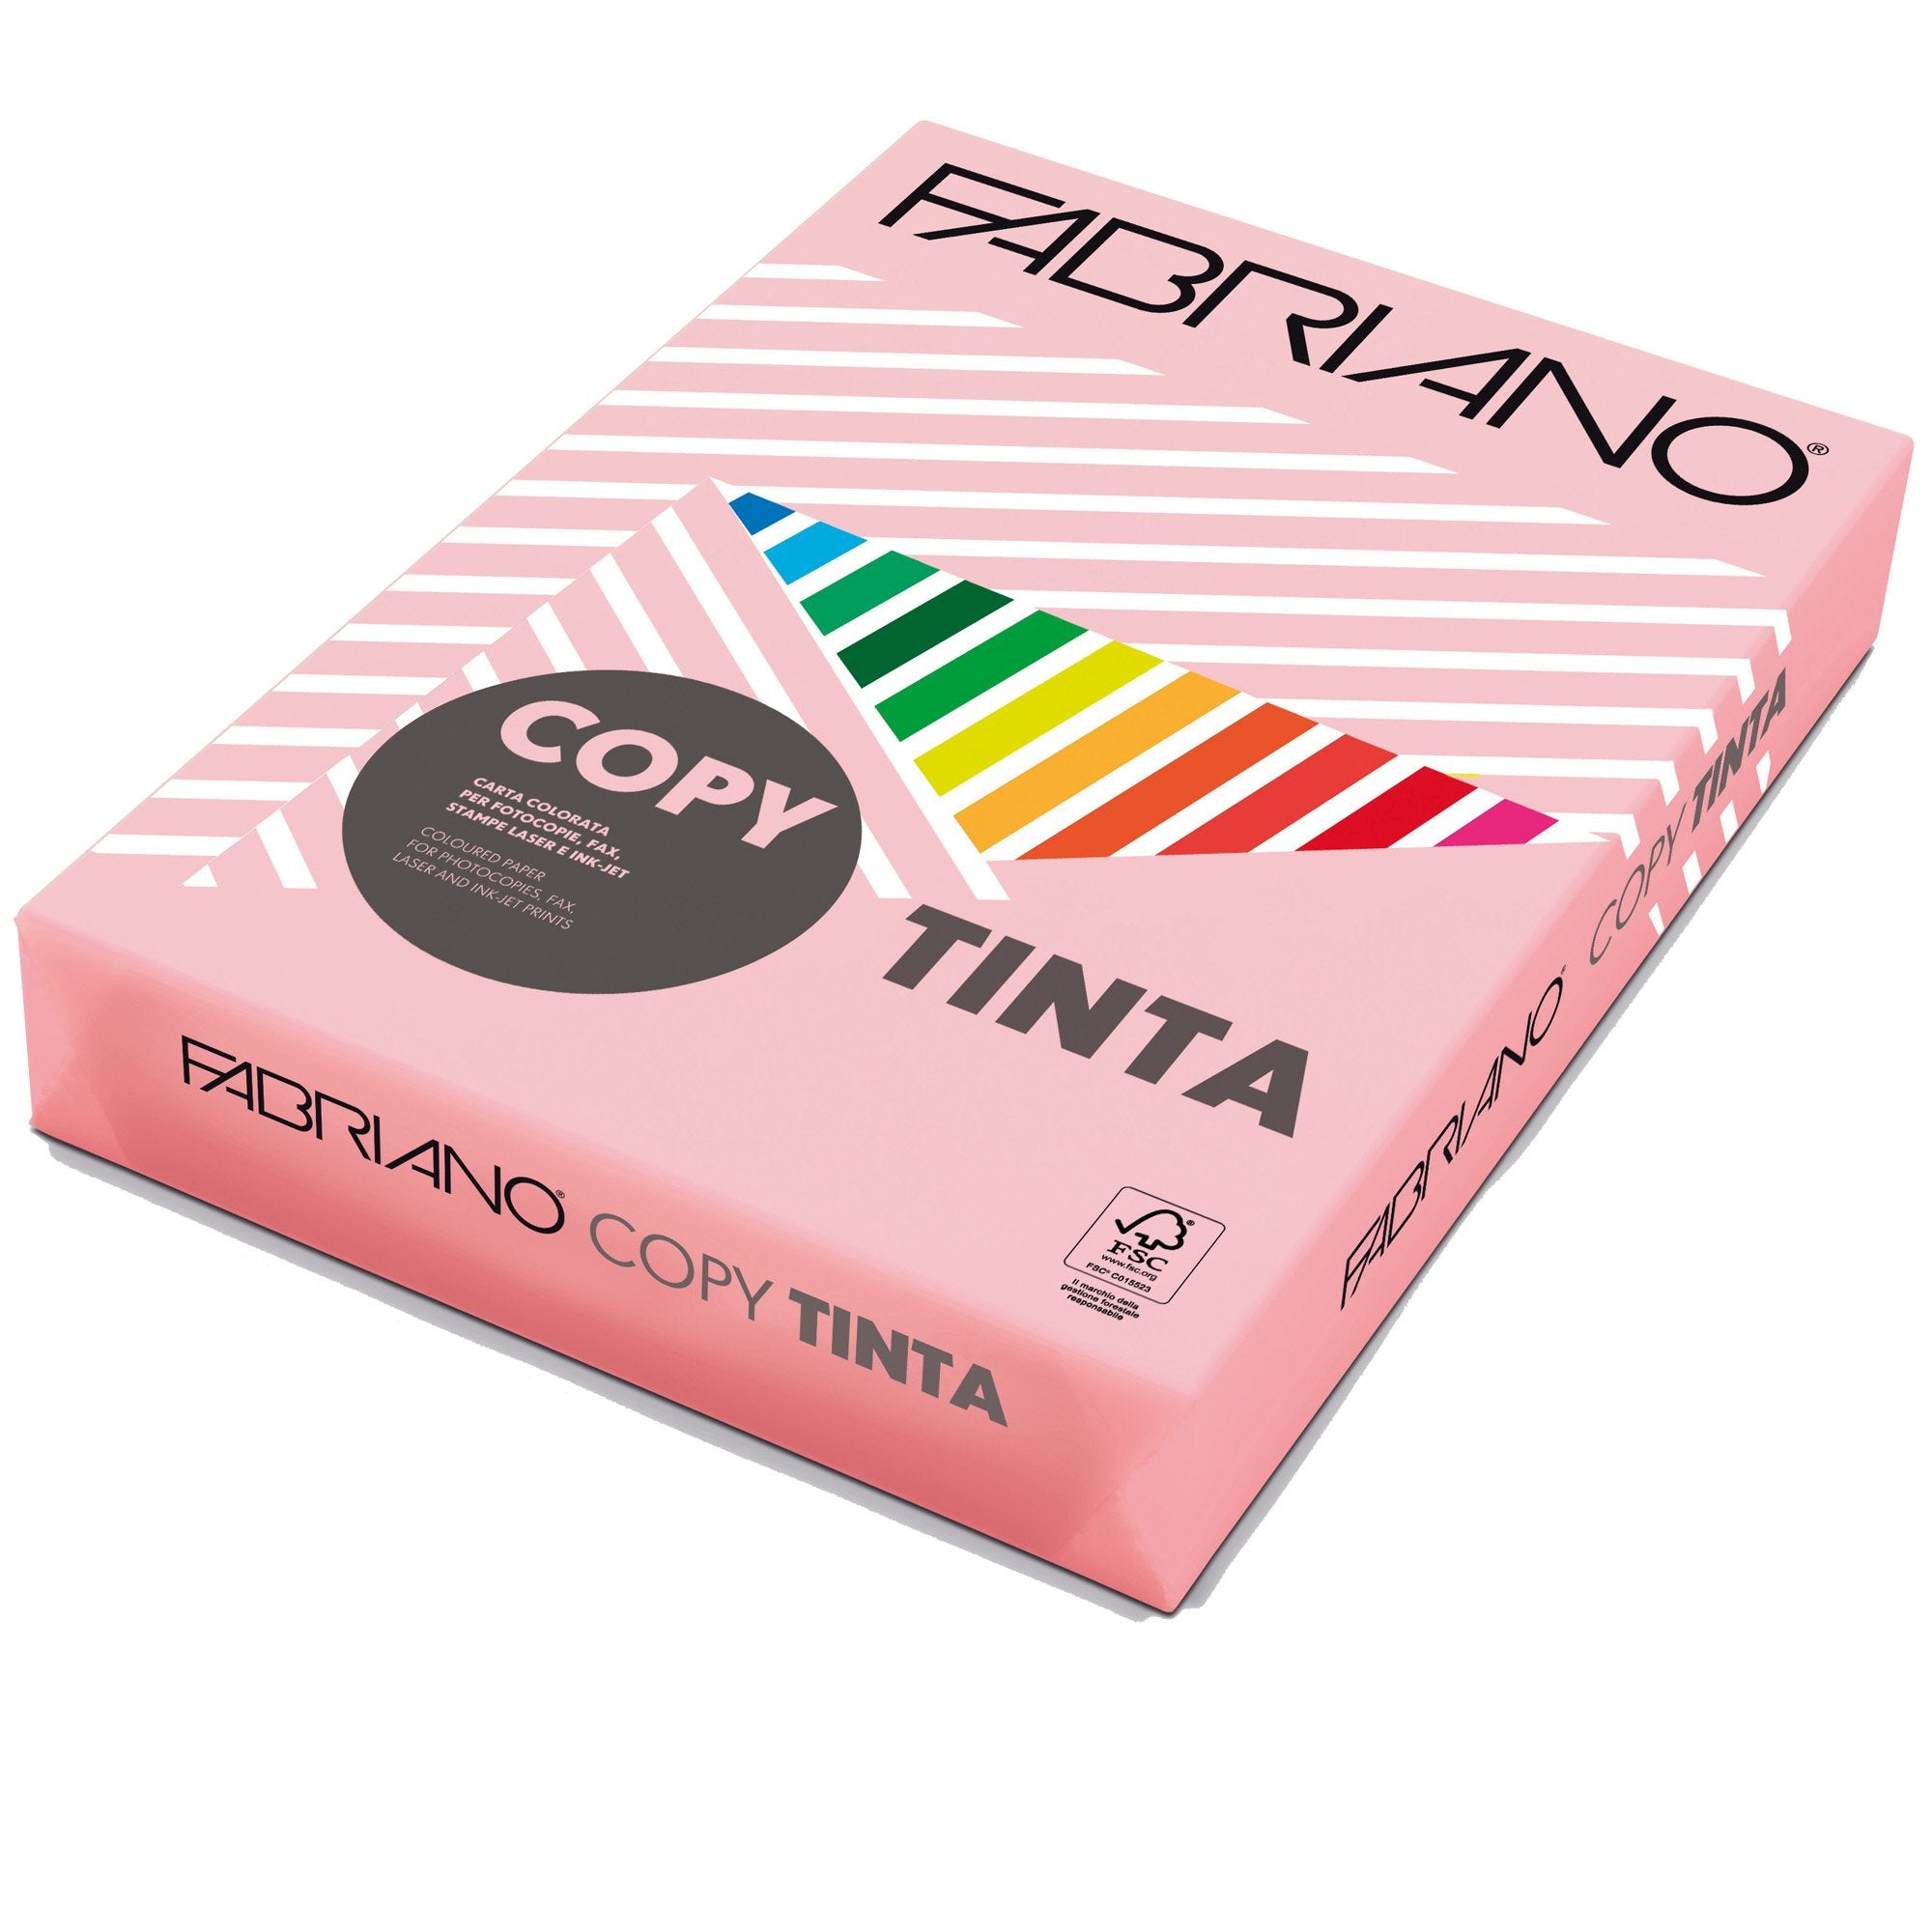 fabriano-carta-copy-tinta-a3-80gr-250fg-col-tenue-rosa